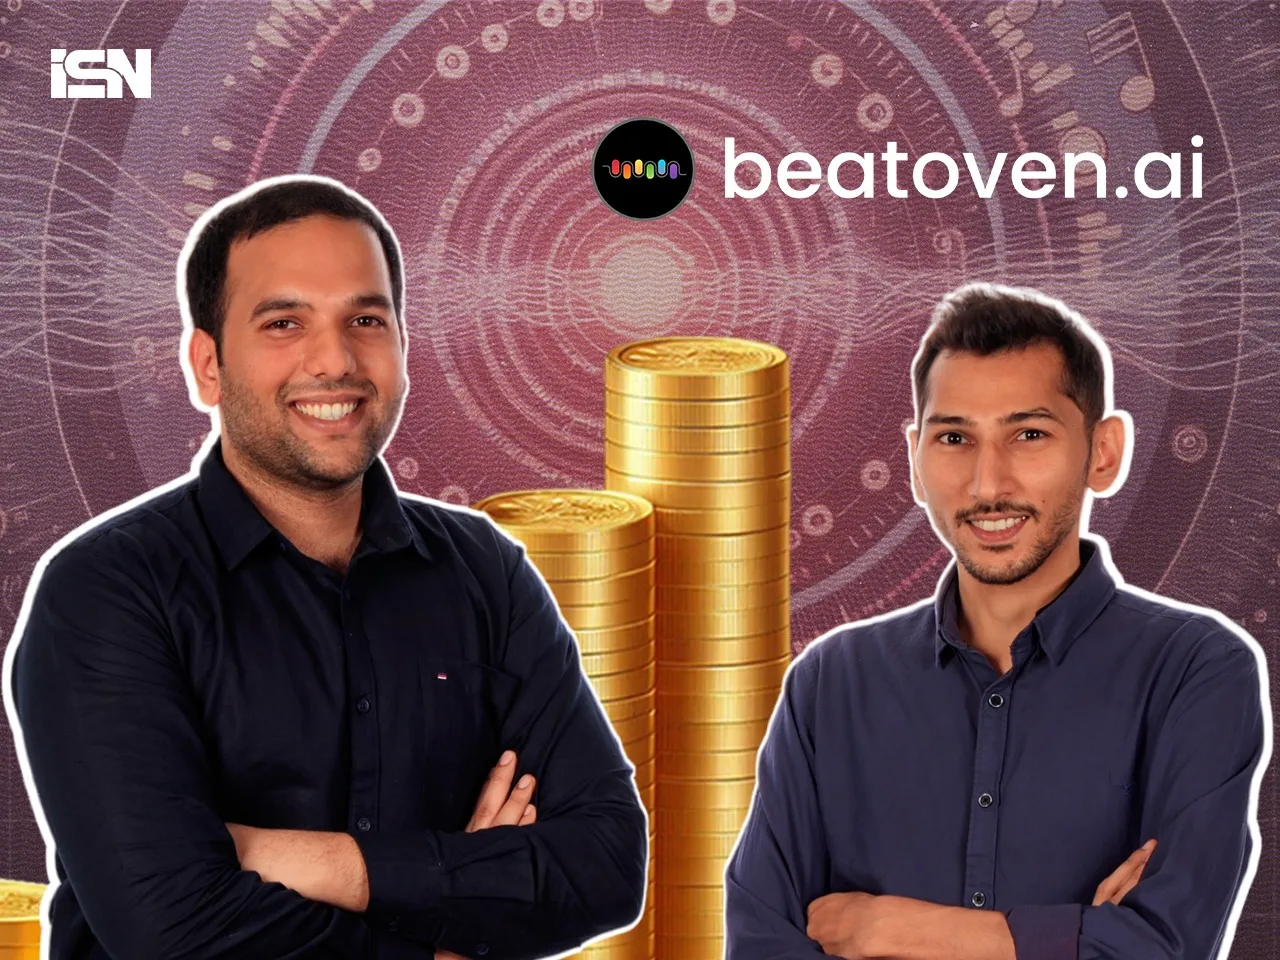 Beatoven.ai raises $1.3M